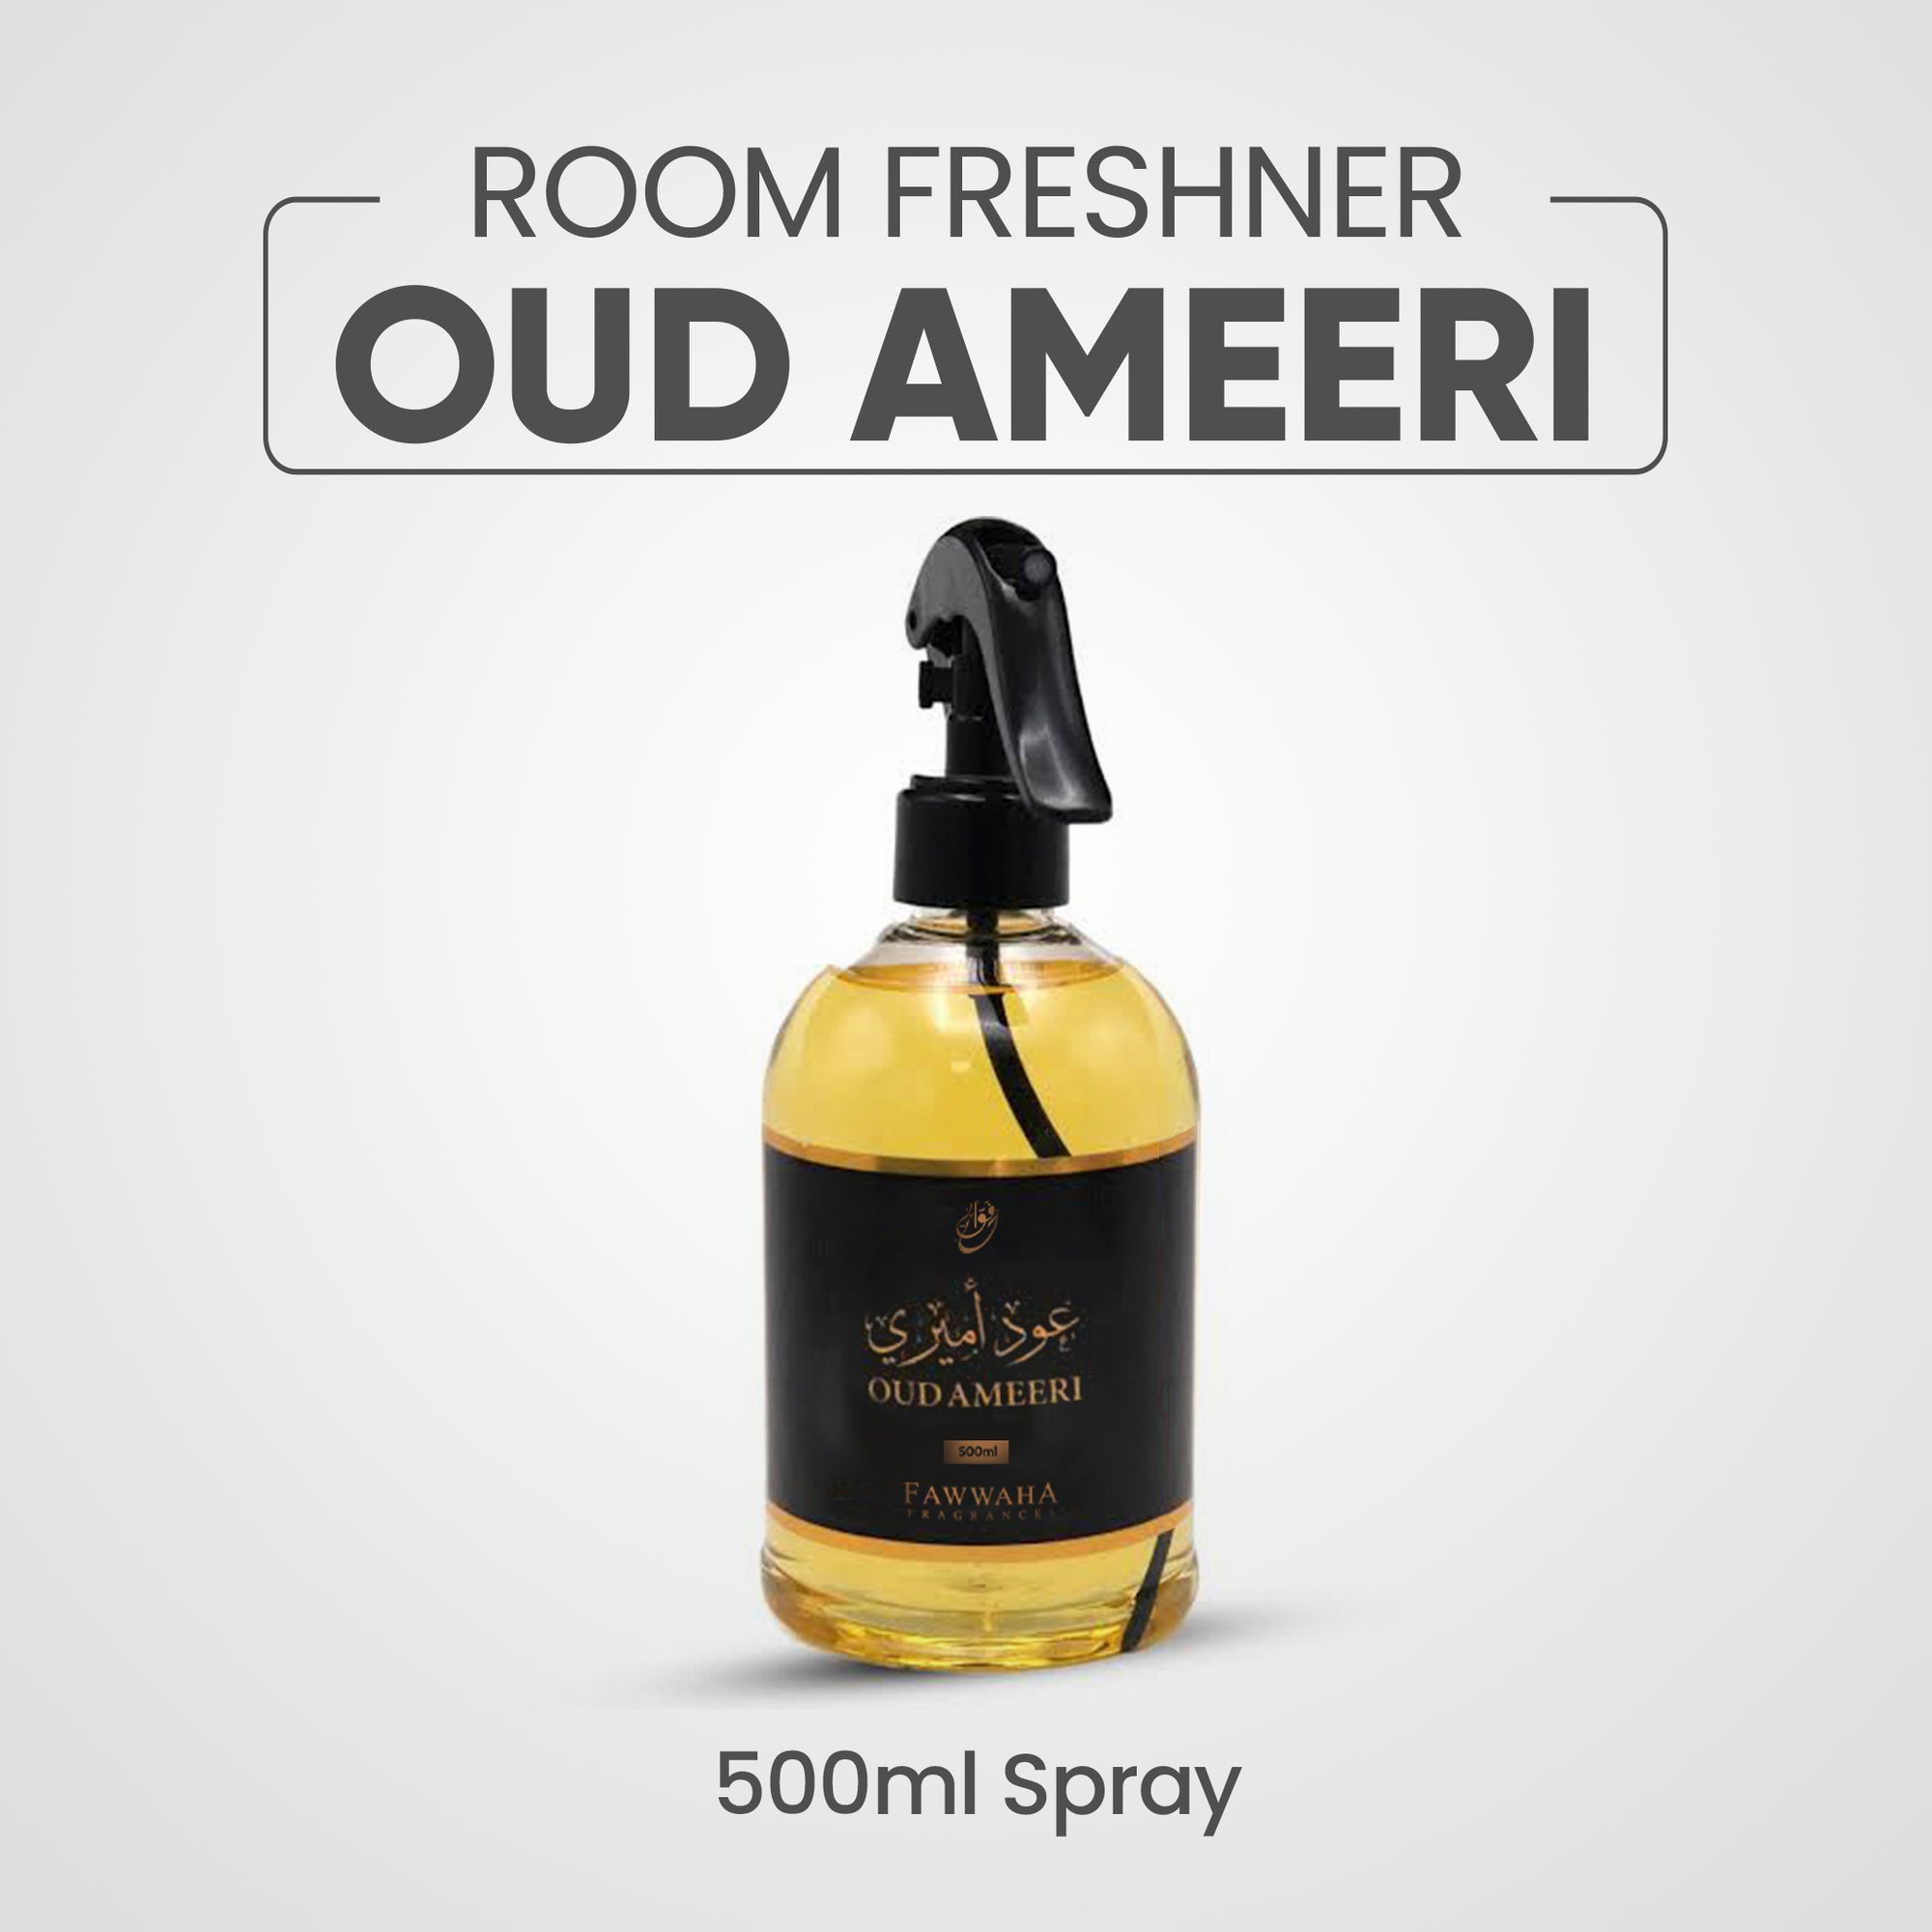 Oud Ameeri Room Freshner